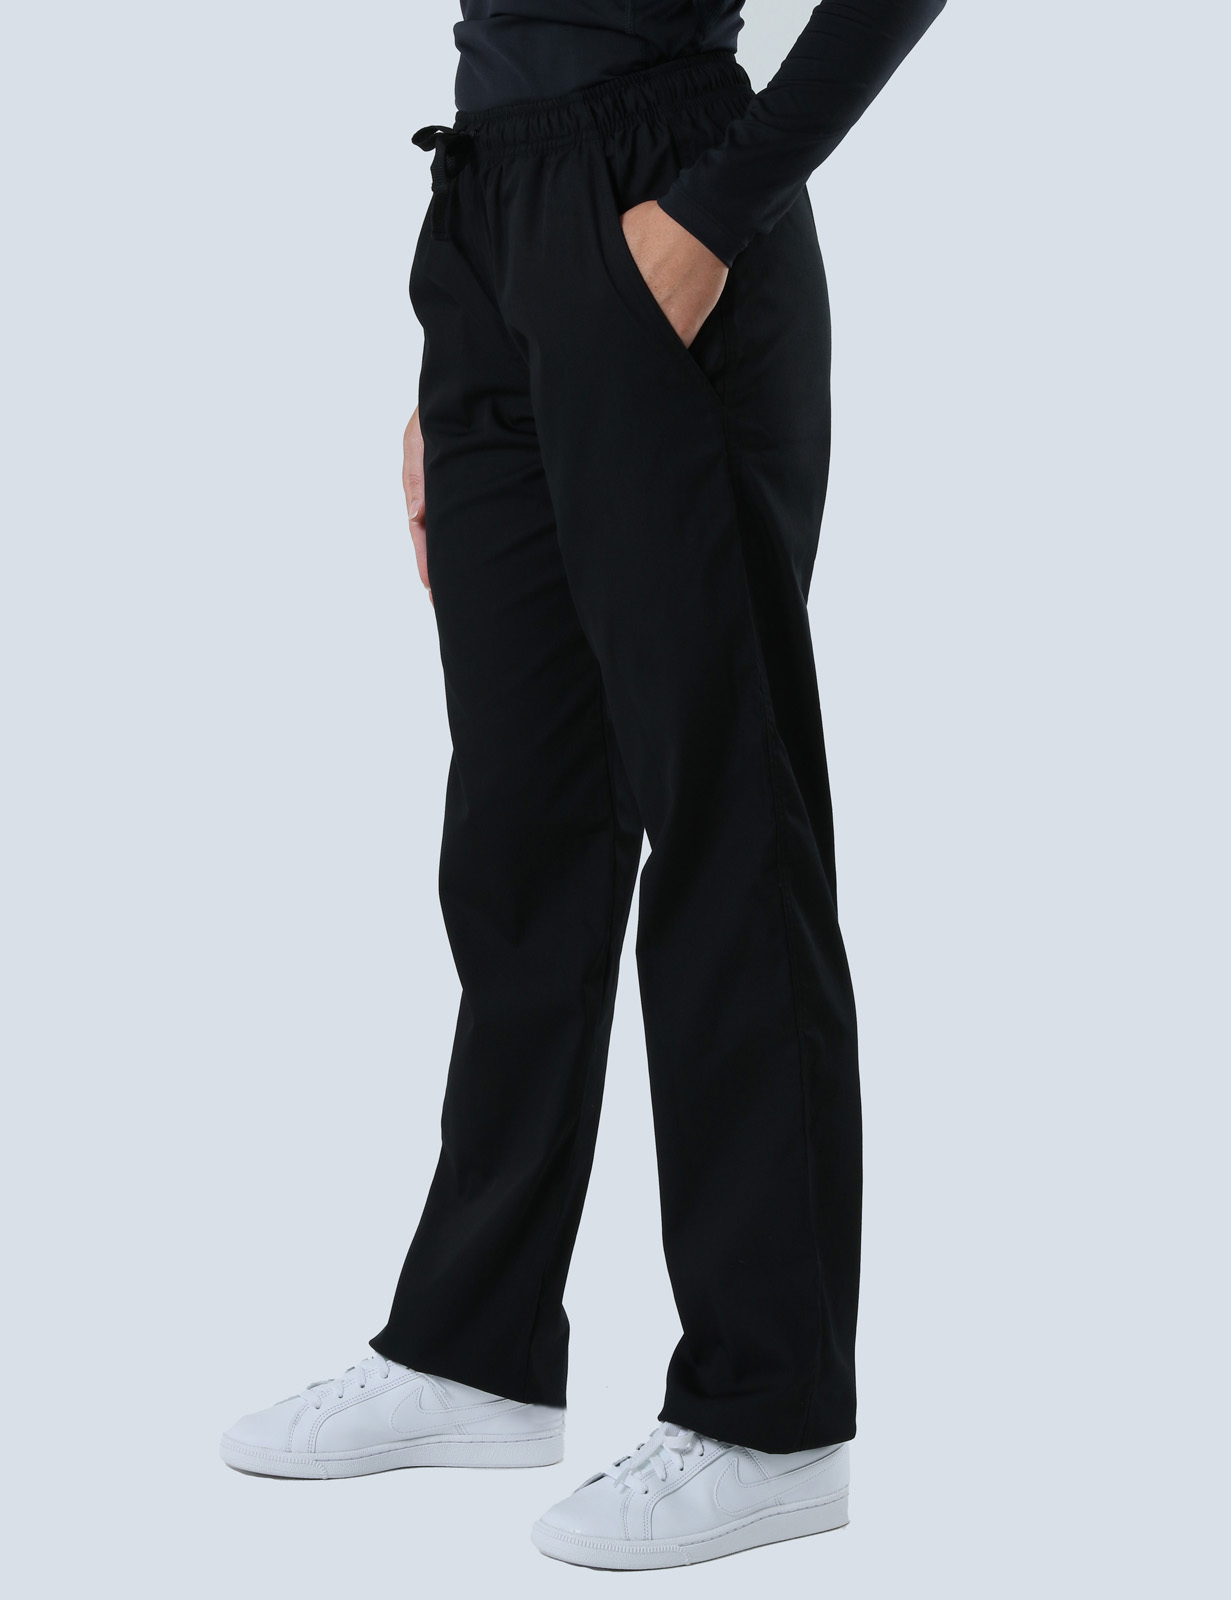 Women's Utility Pants - Black - 5x Large